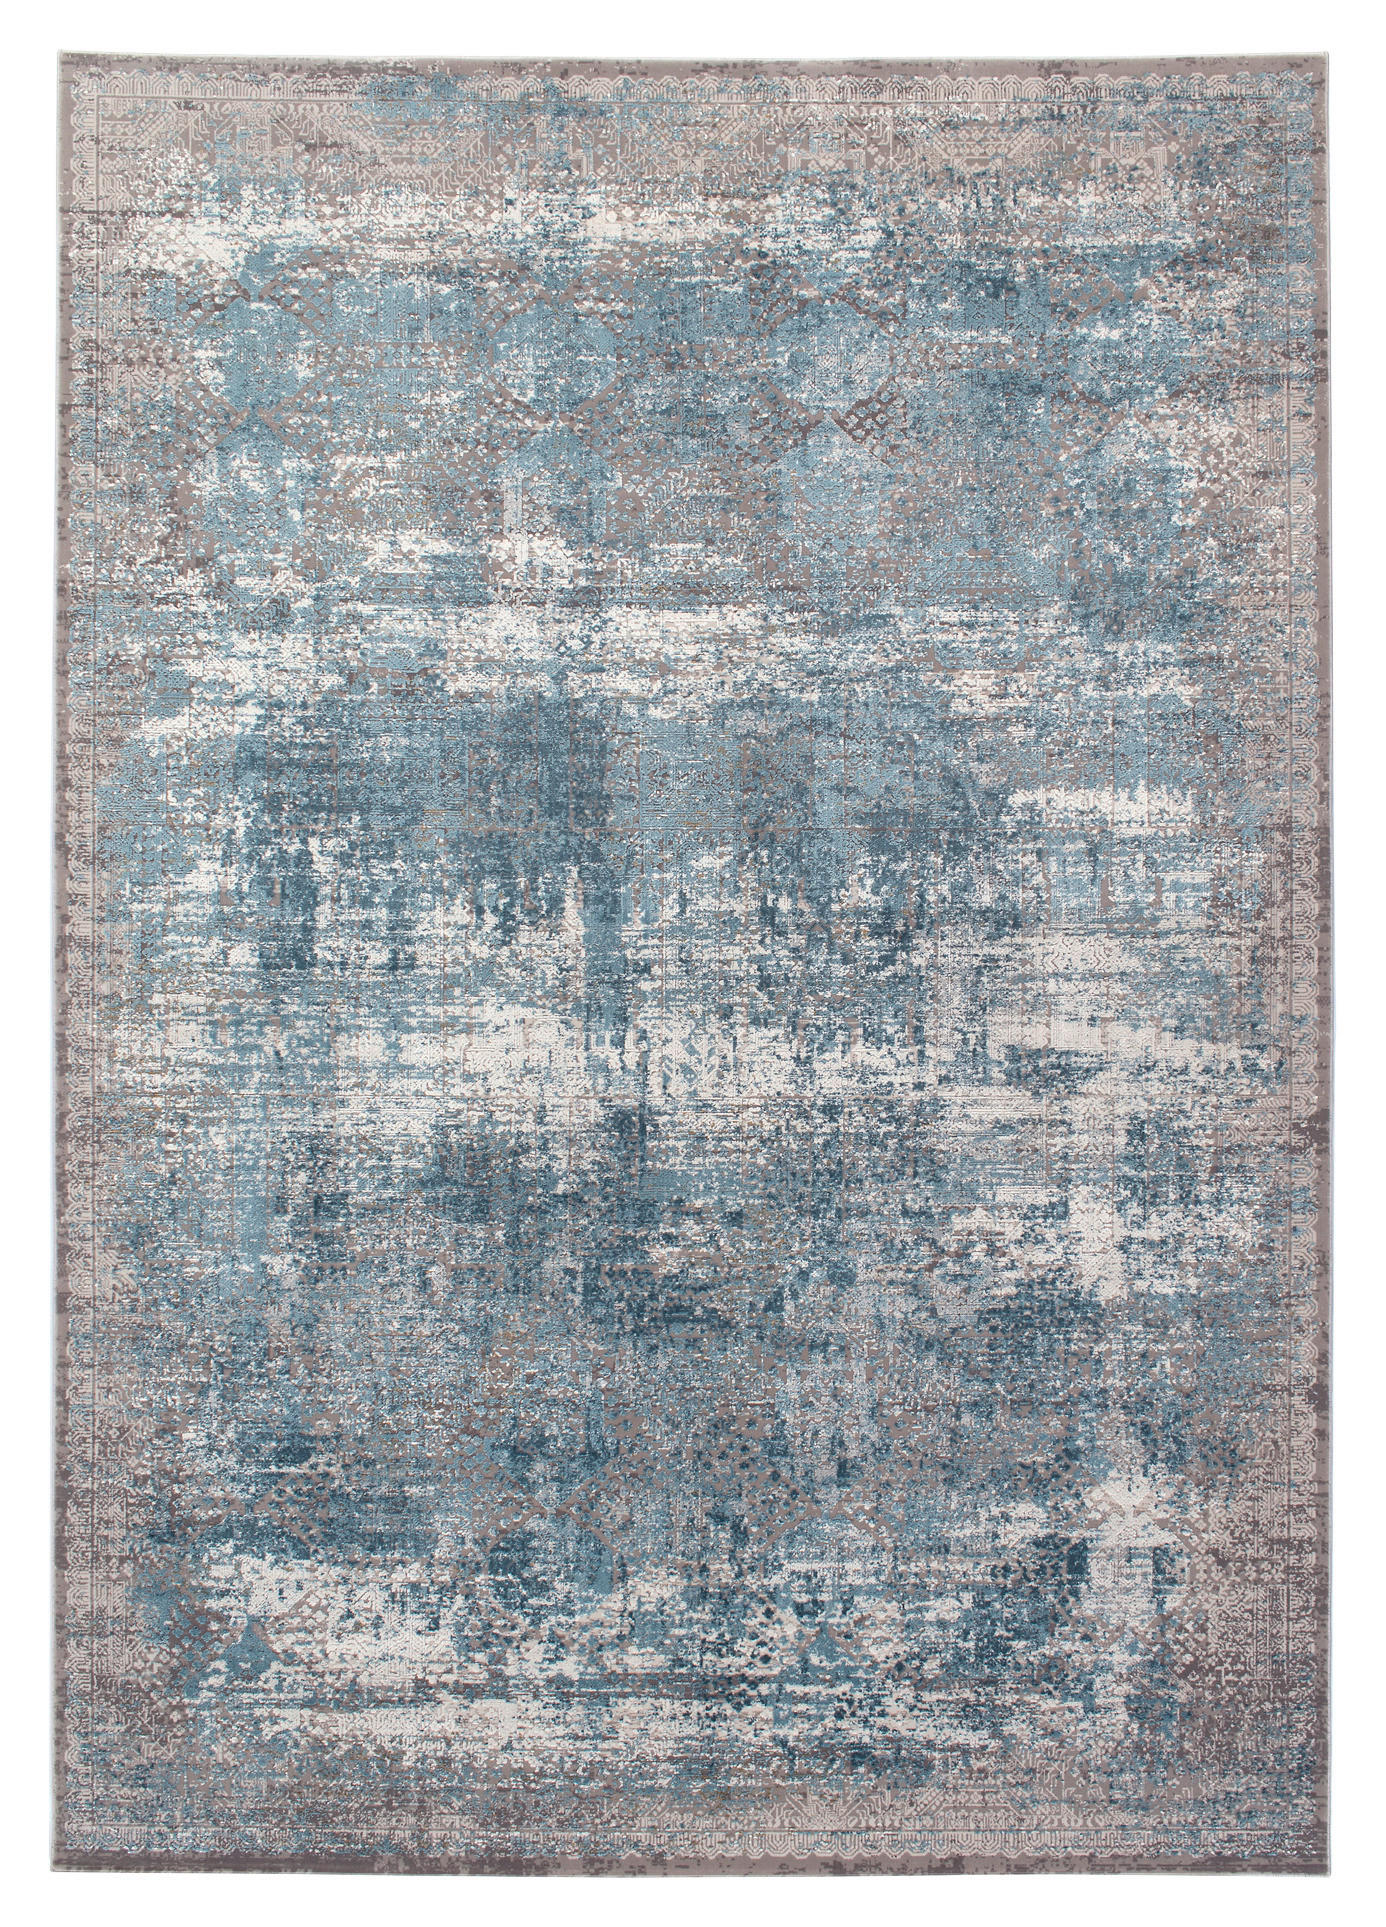 WEBTEPPICH 200/290 cm Apollo  - Blau/Grau, Design, Textil (200/290cm) - Musterring